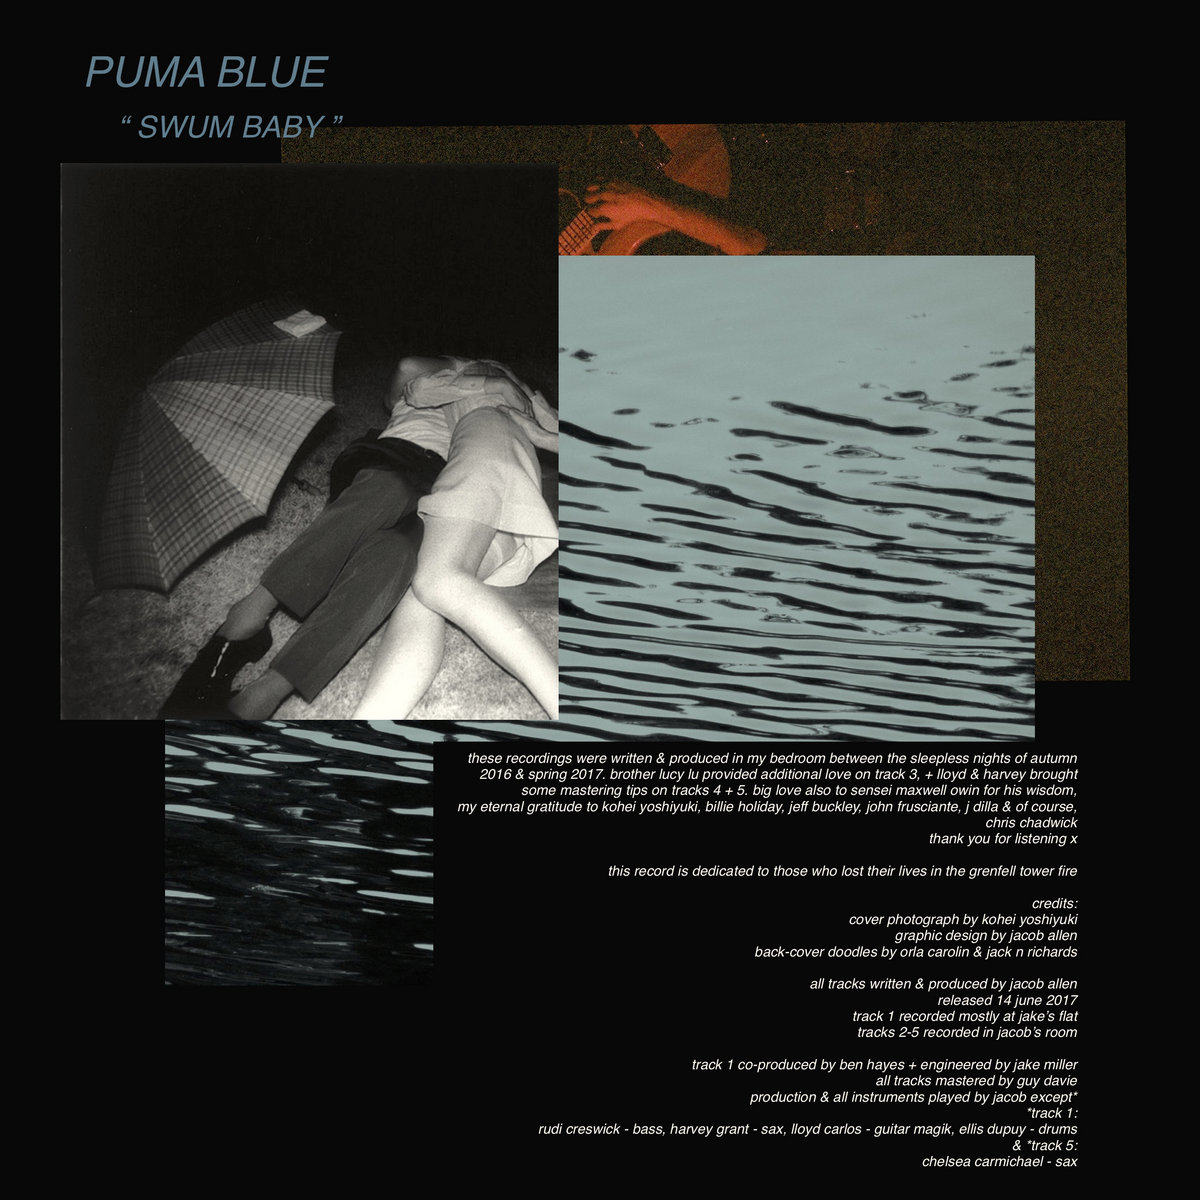 puma blue just a phase lyrics,Limited Time Offer,slabrealty.com